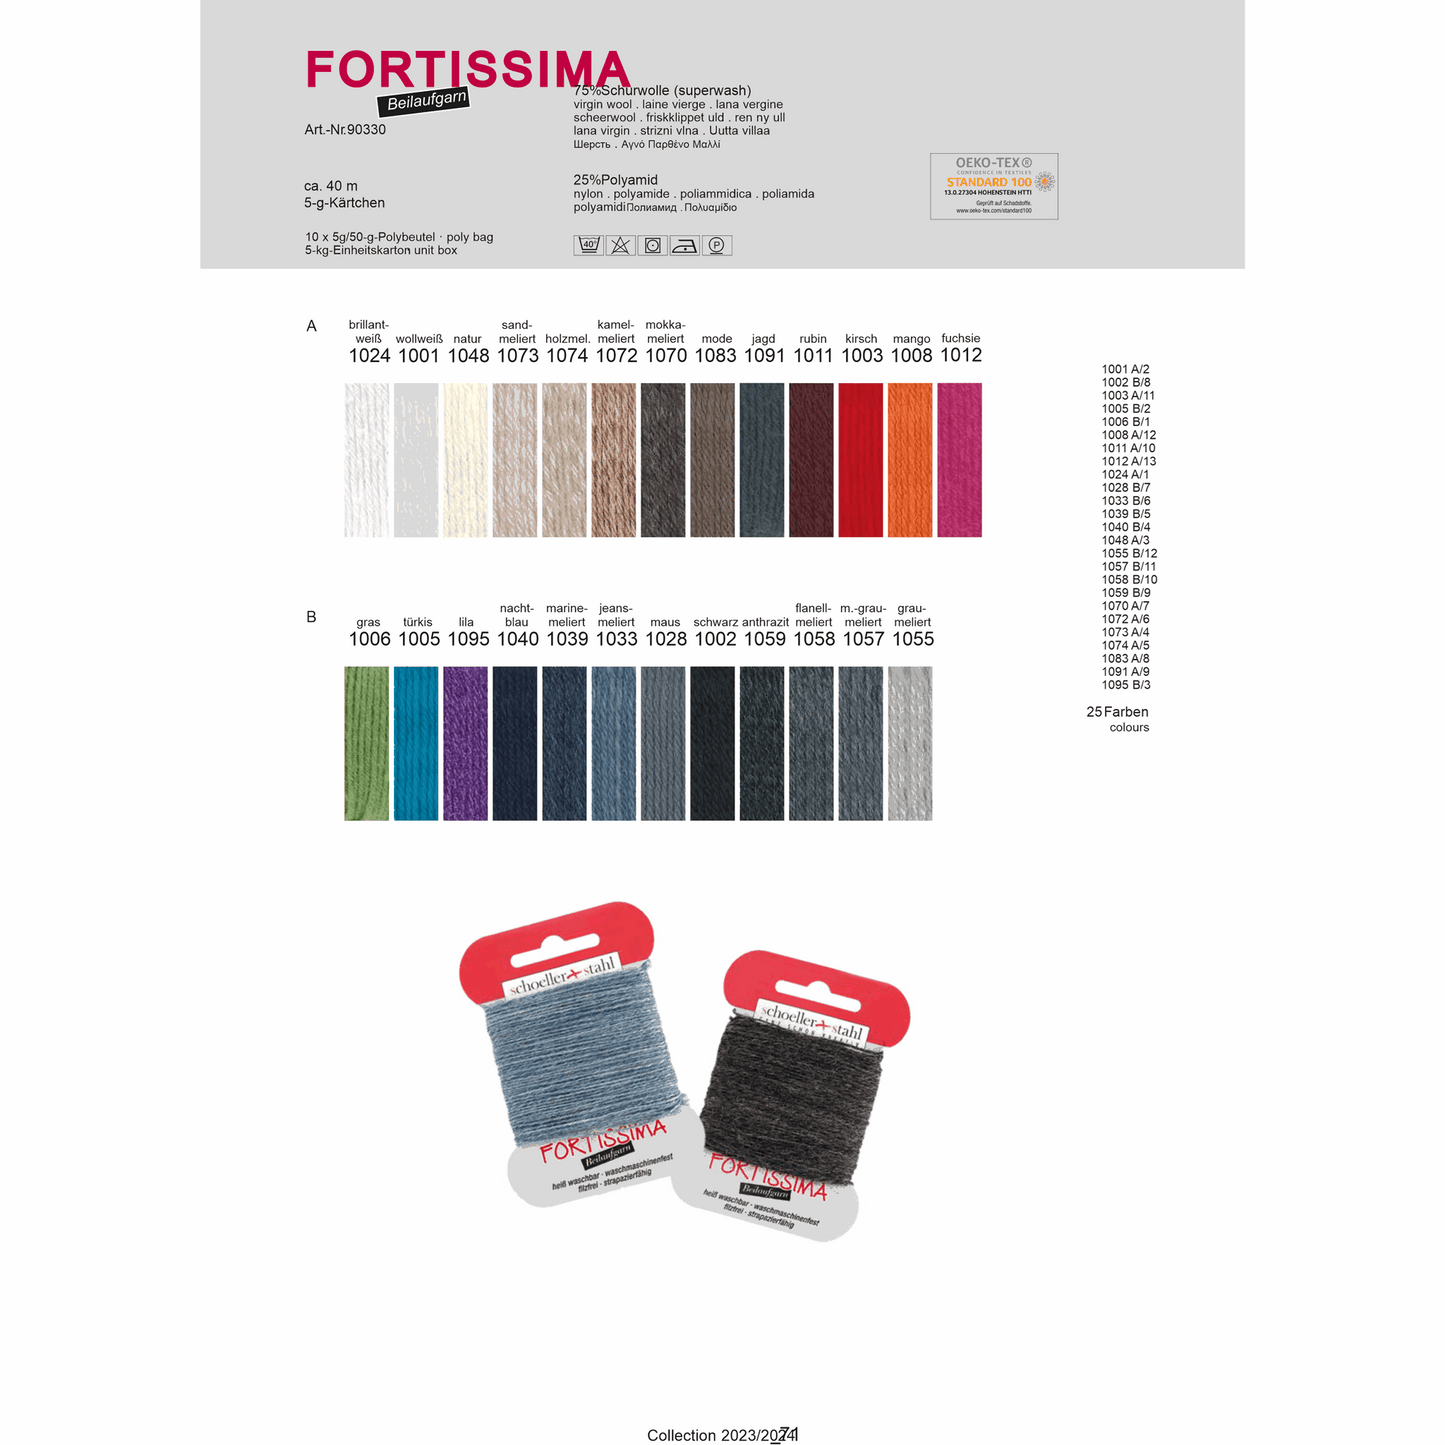 Fortissima Beilaufgarn 5g, 90330, Farbe 1005, türkis